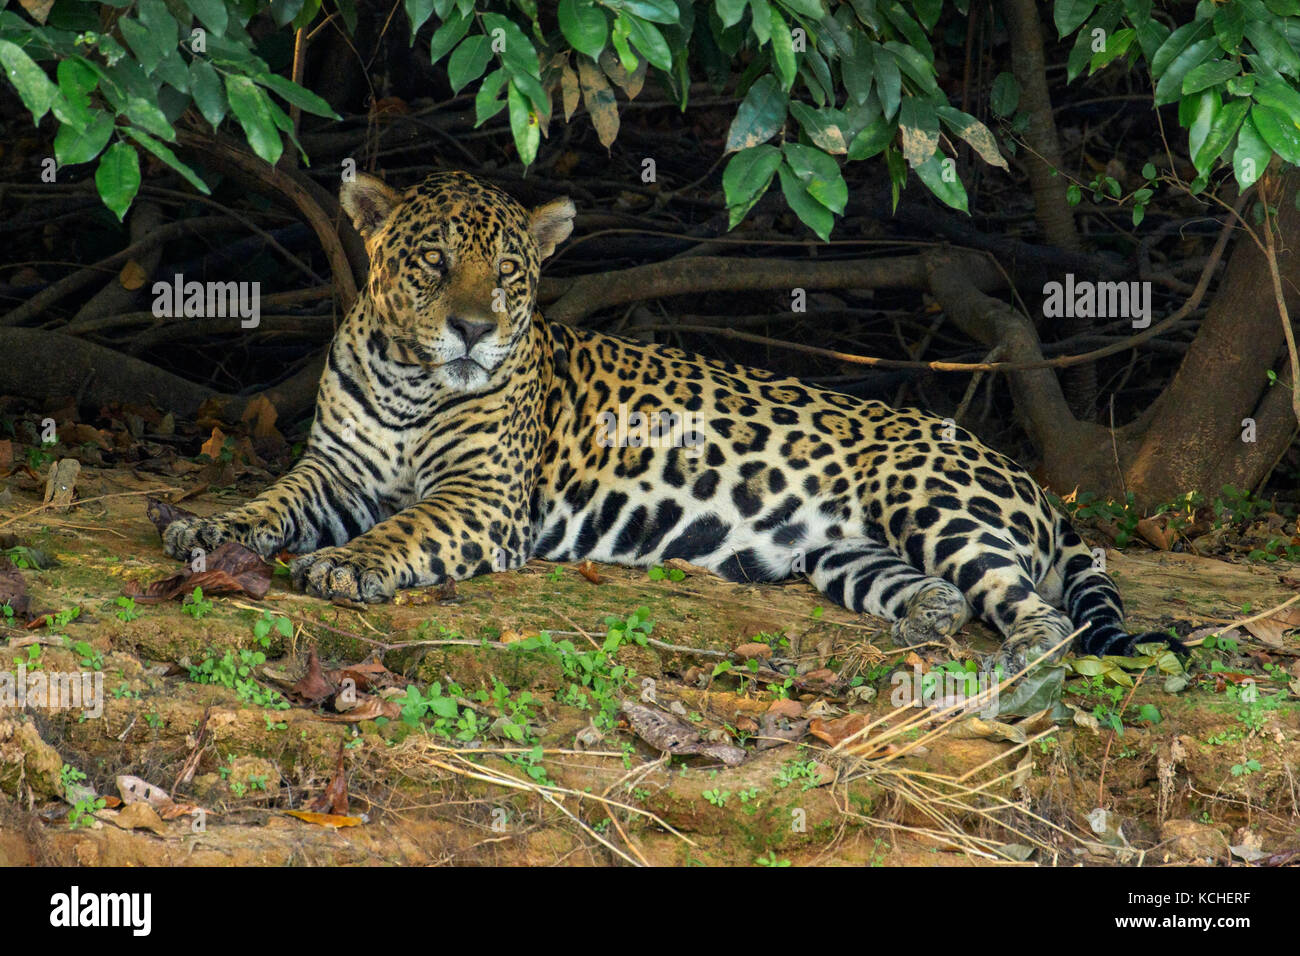 Jaguar in a wetland area in the Pantanal region of Brazil. Stock Photo